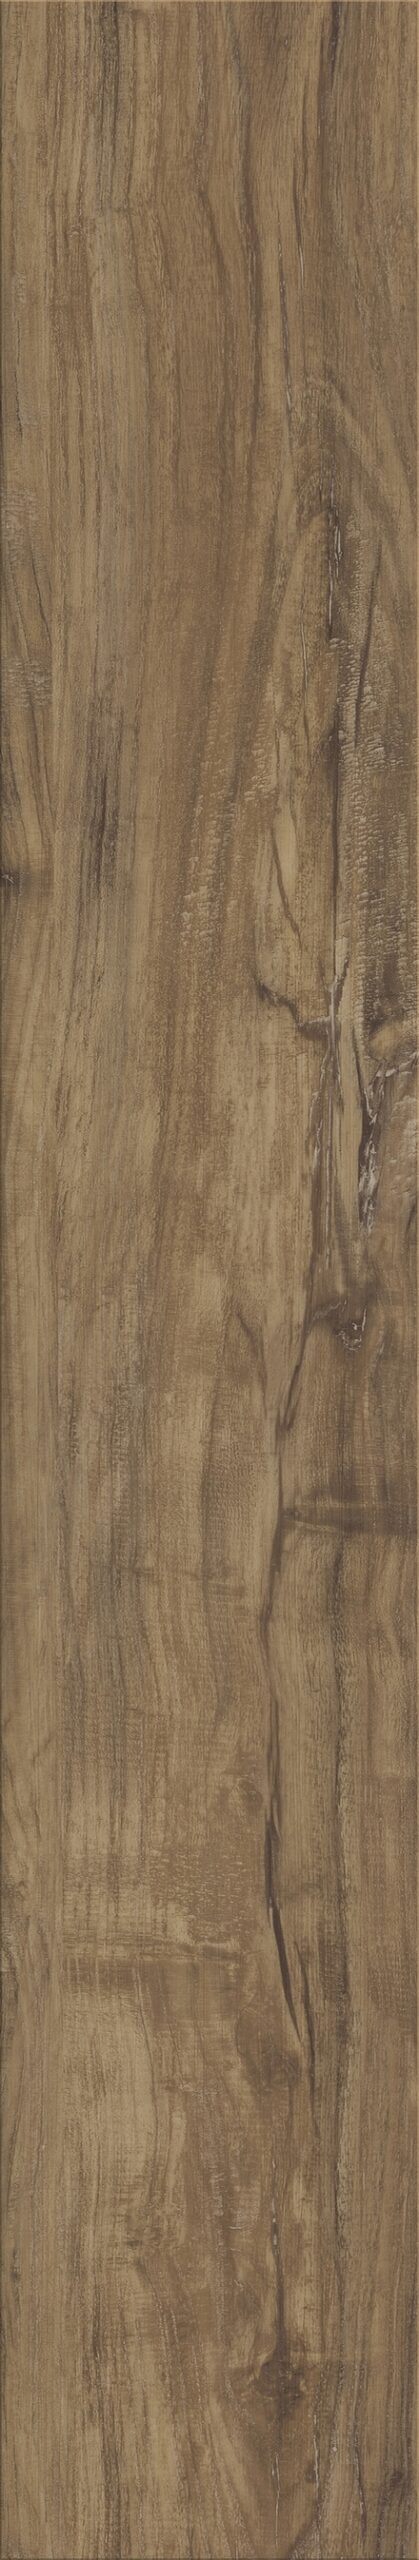 DISTRESSED OLIVE WOOD - Luvanto Click Flooring-02-scaled